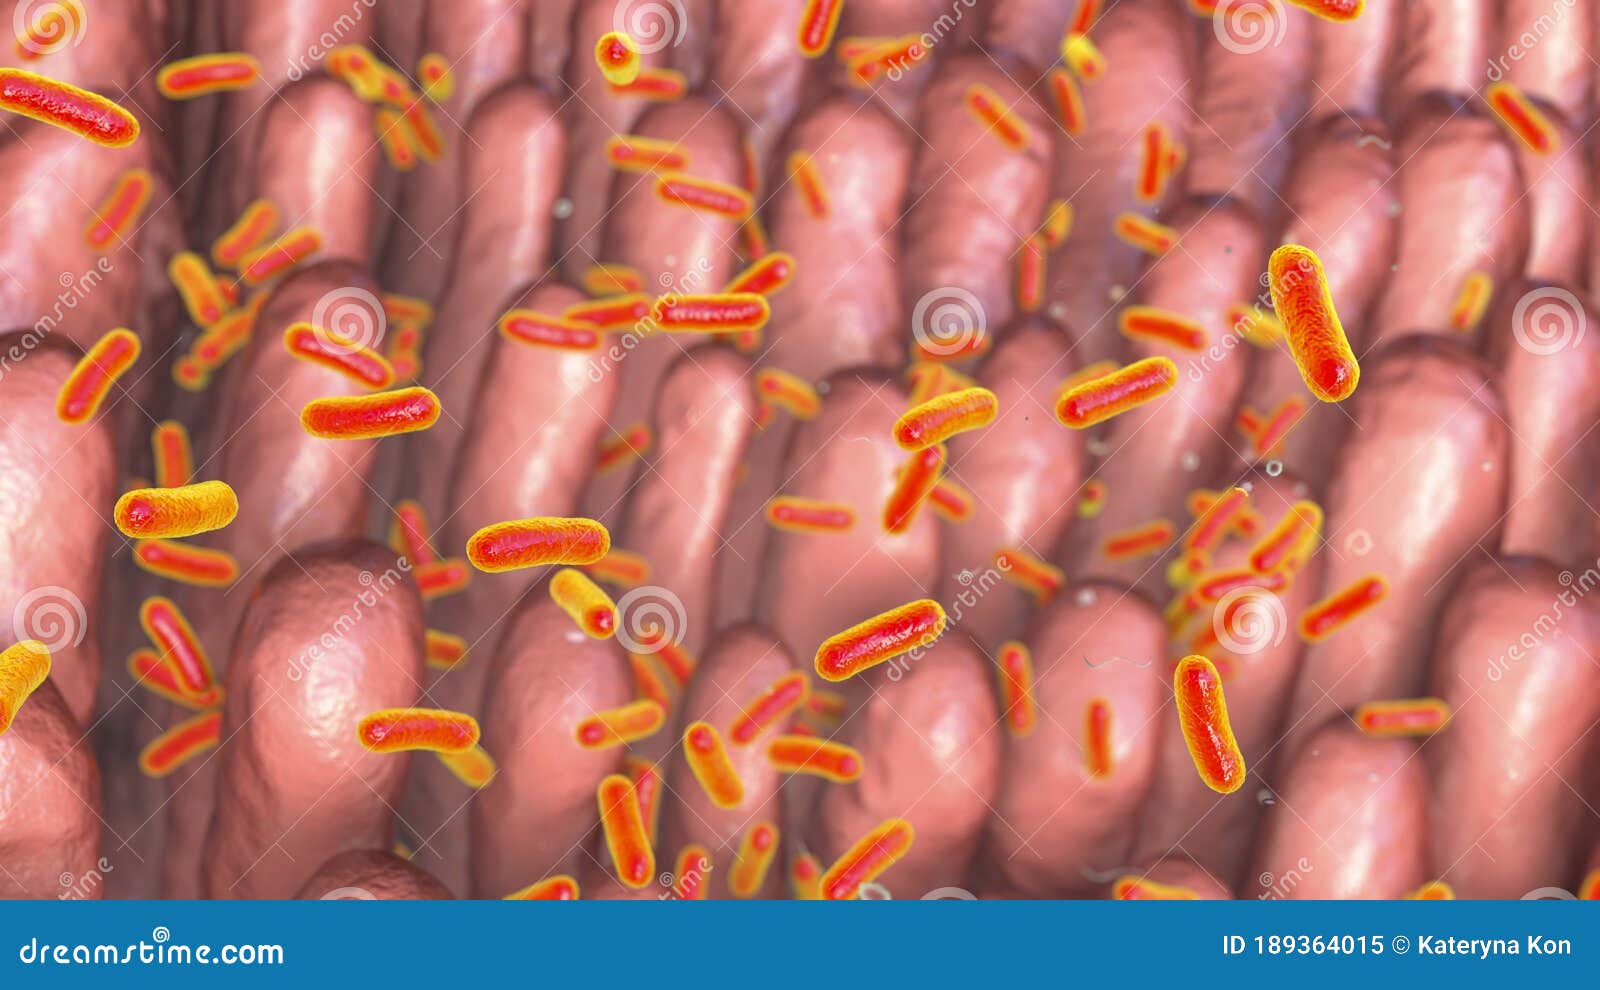 intestinal villi with enteric bacteria